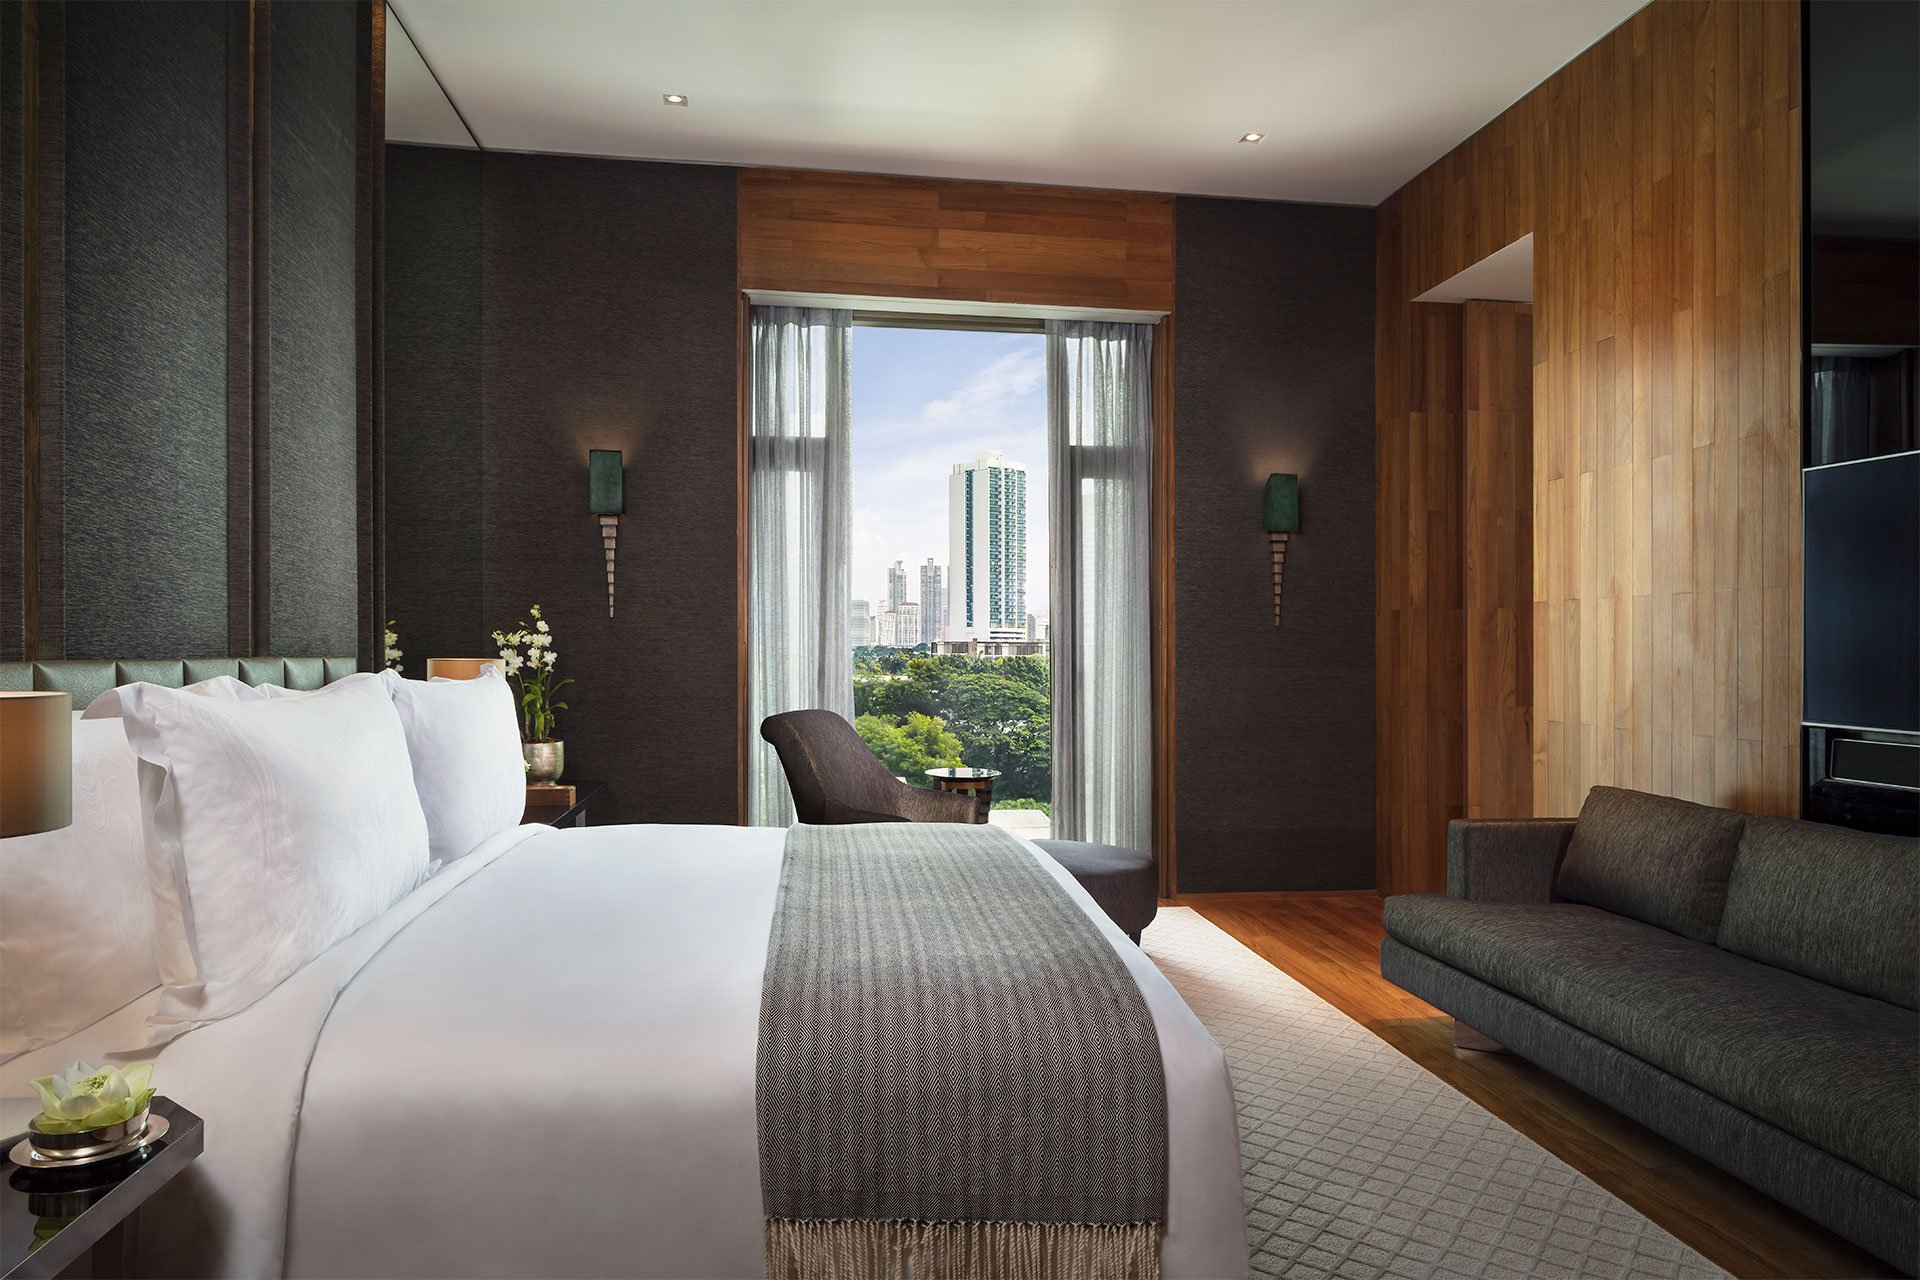  _Club_Suite_ _Bedroom_sukhothai hotel bangkok